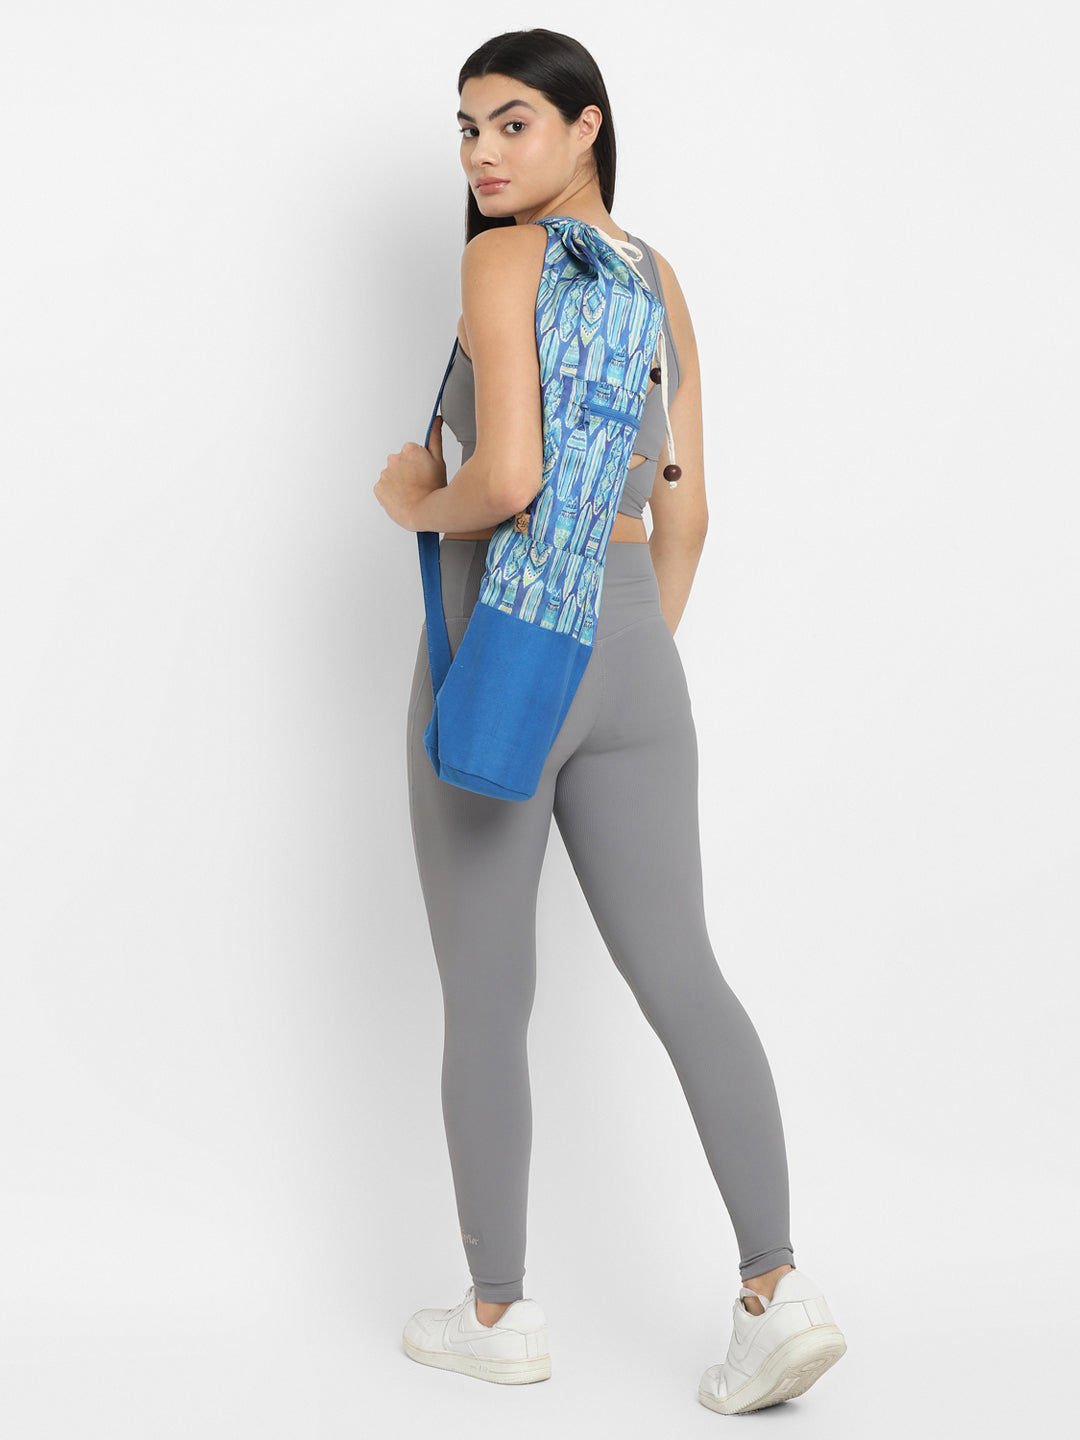 Warrior2 Yoga Mat Bag, Muti-Purpose Yoga Backpack, Yoga, Gym, Pilates |  Turquoise Zigzag